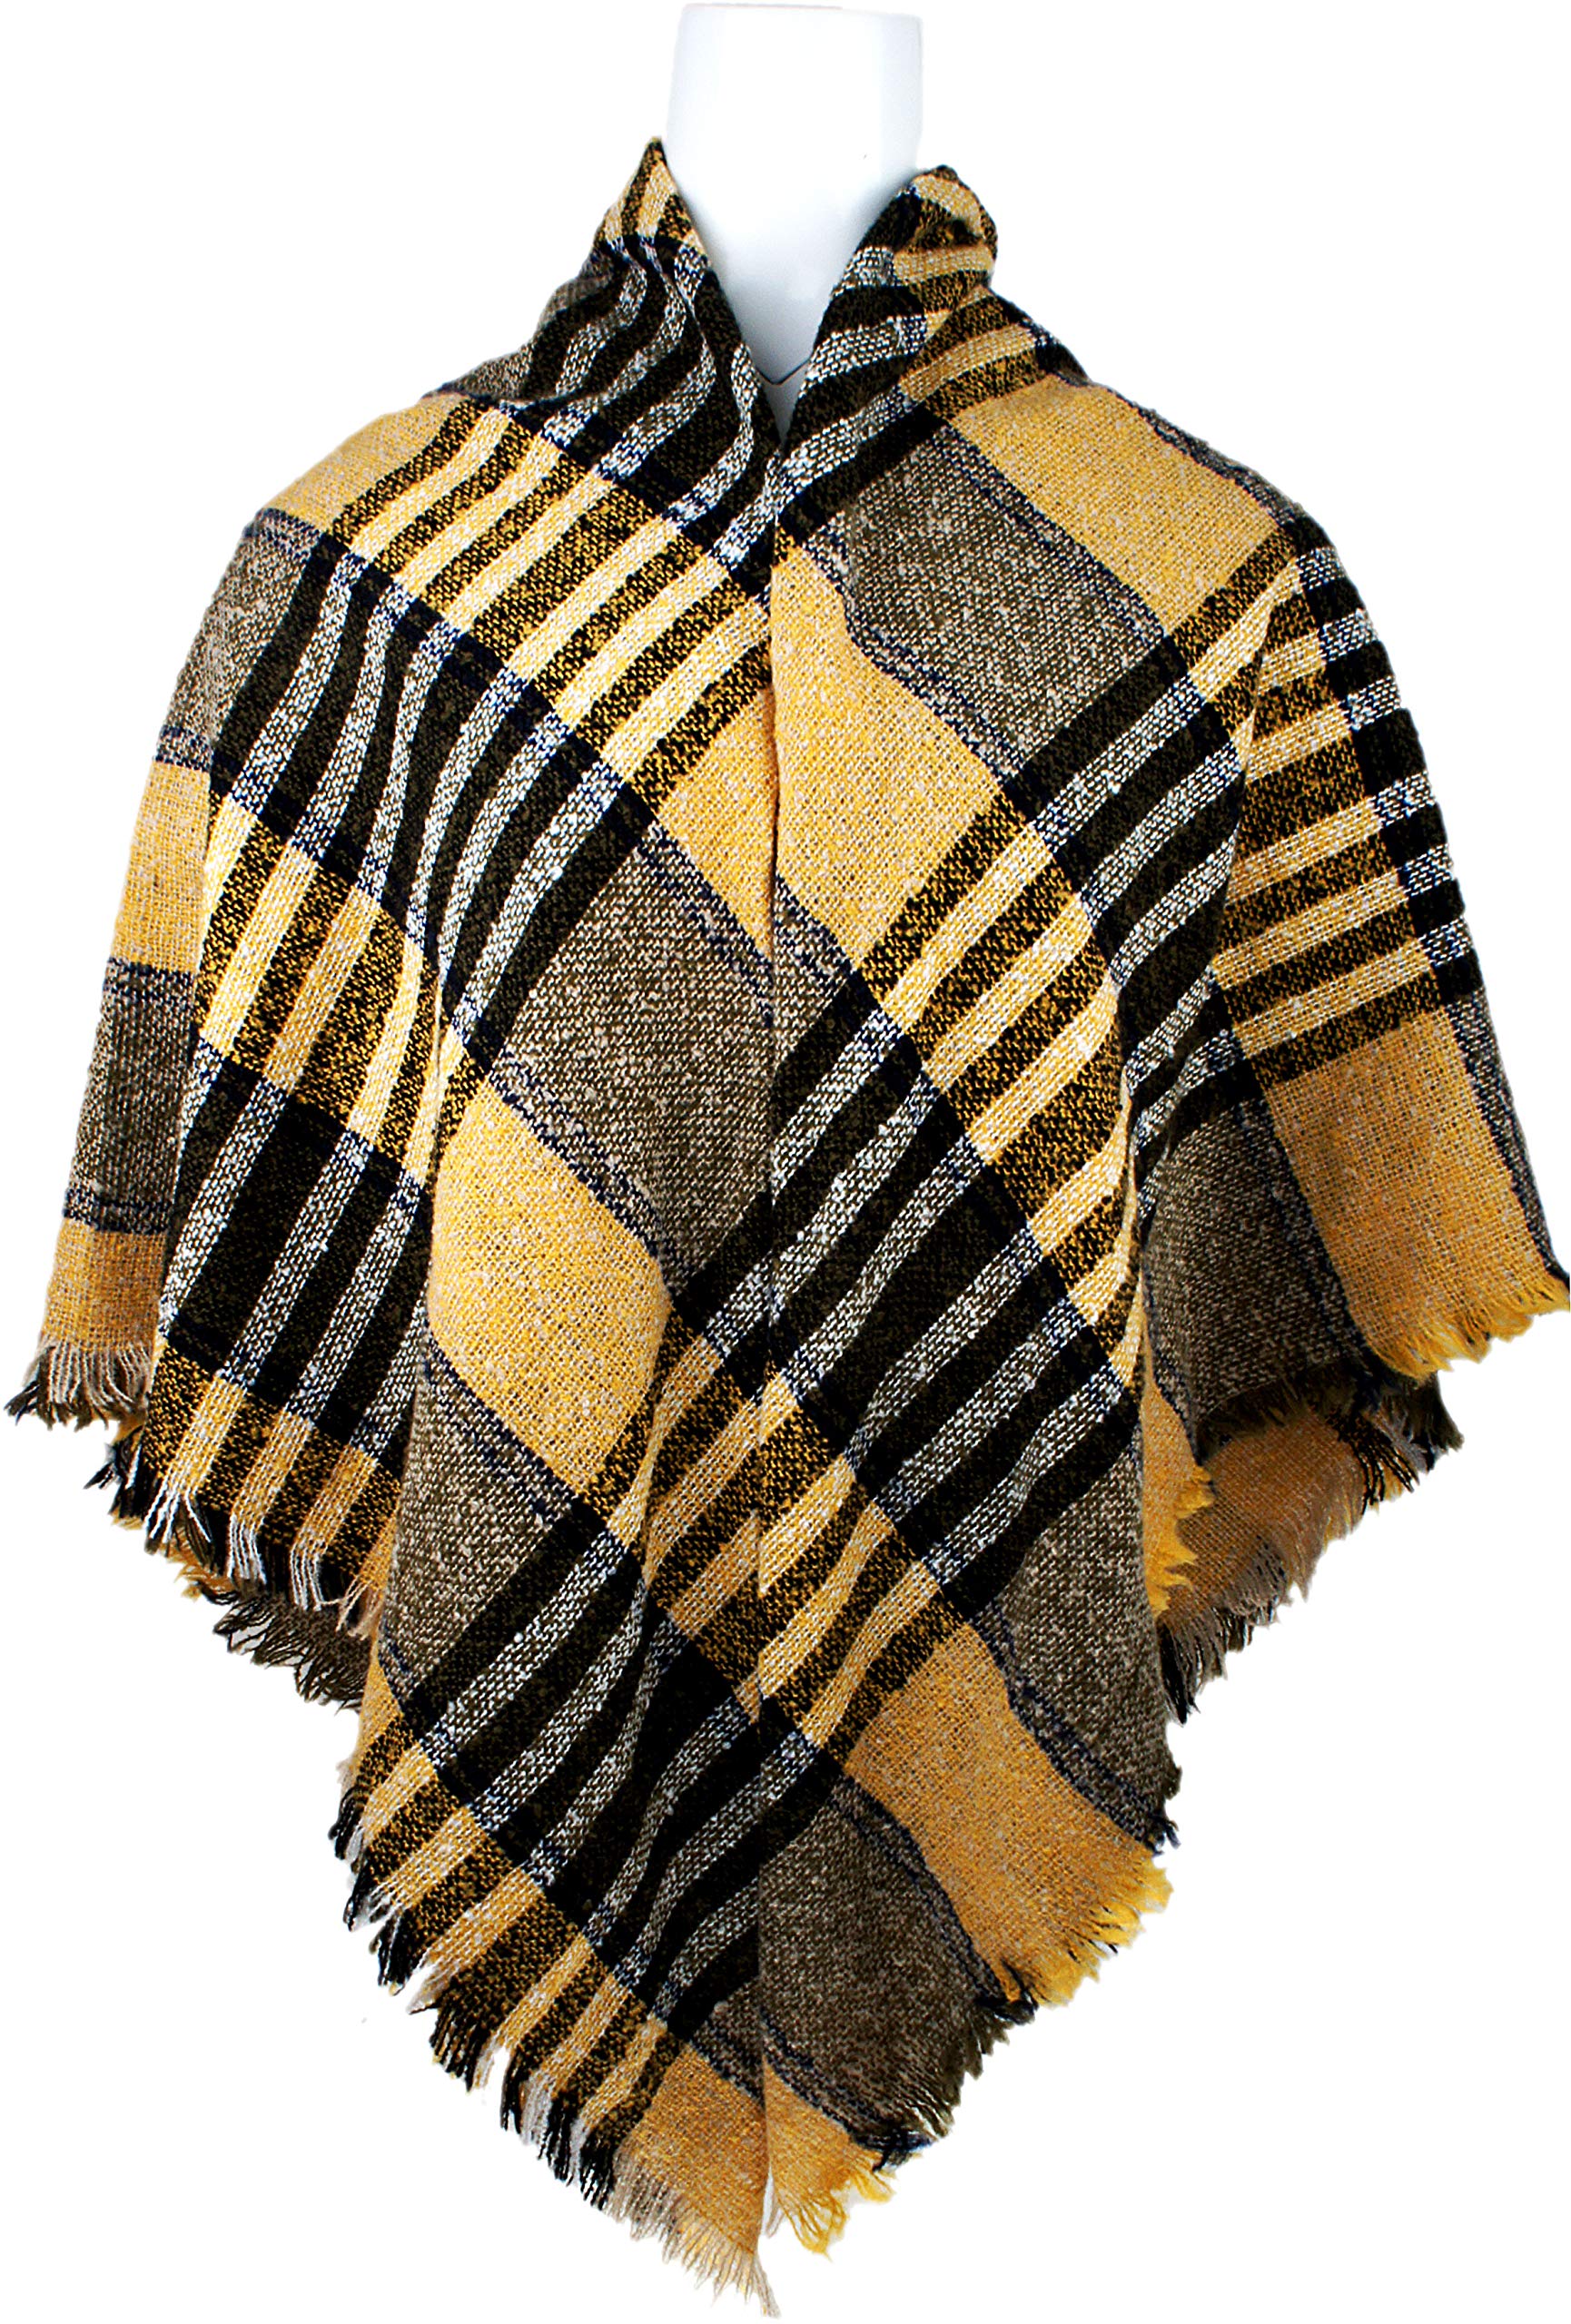 Women's Plaid Blanket Winter Scarf Warm Wrap Oversized Shawl Cape